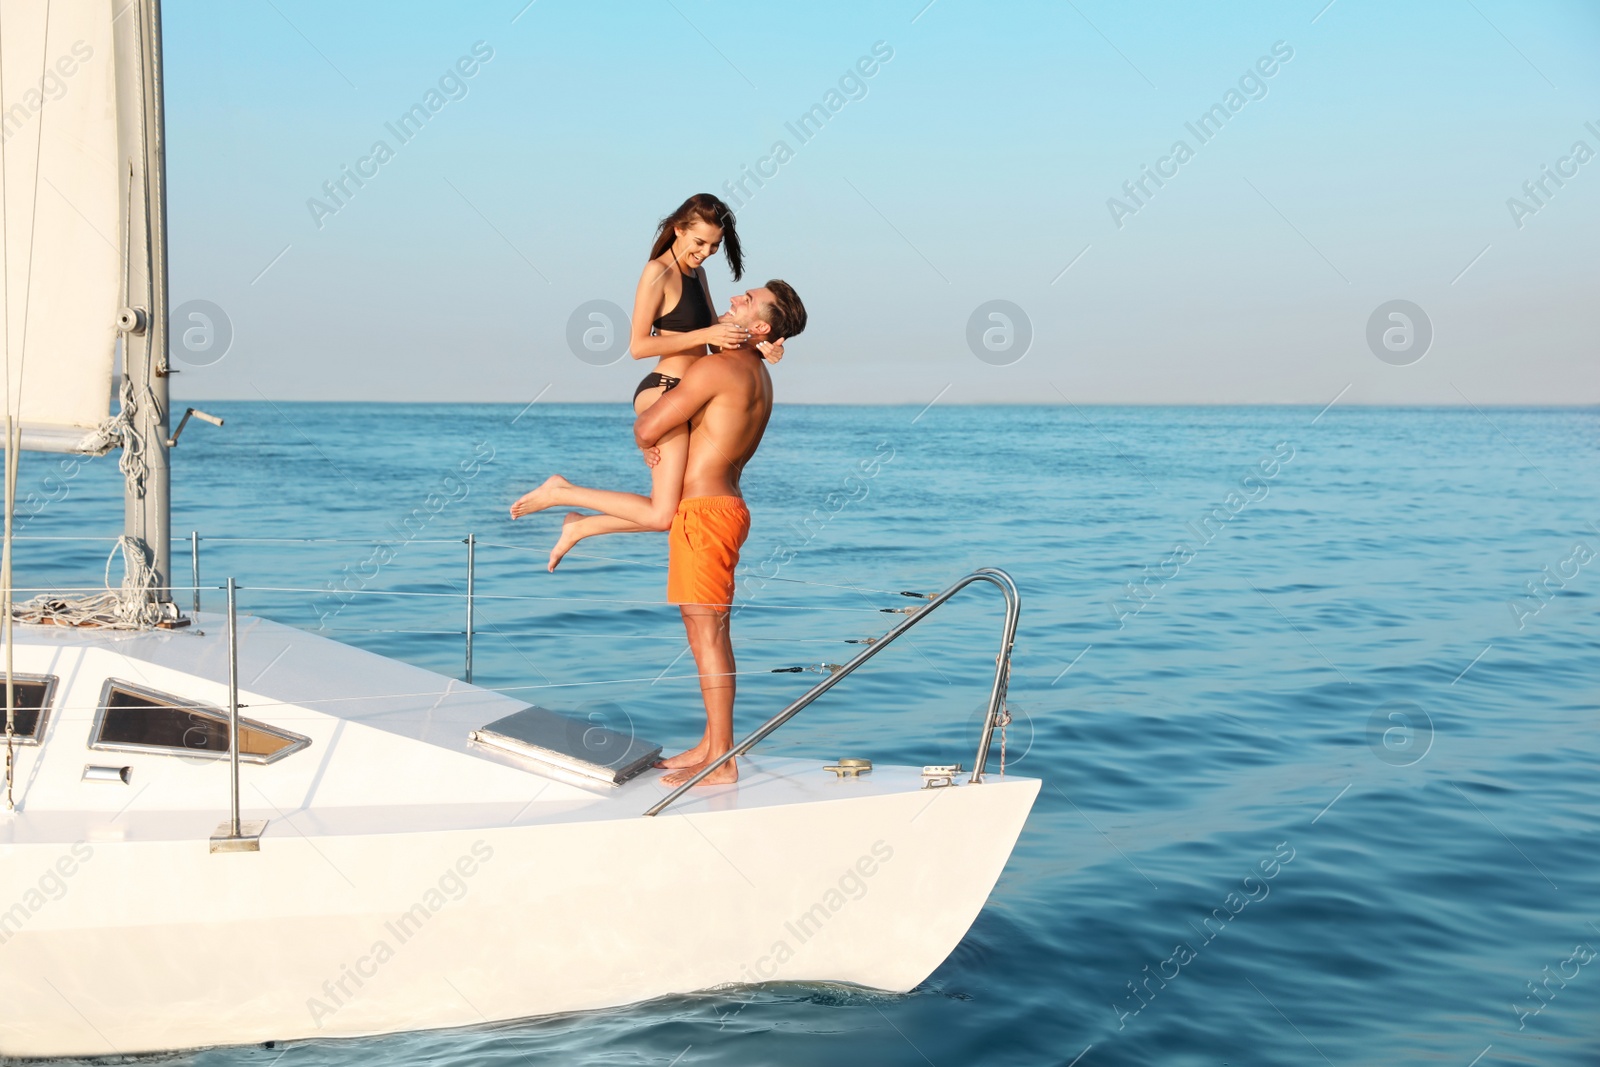 Photo of Young man and his beautiful girlfriend in bikini on yacht. Happy couple during sea trip